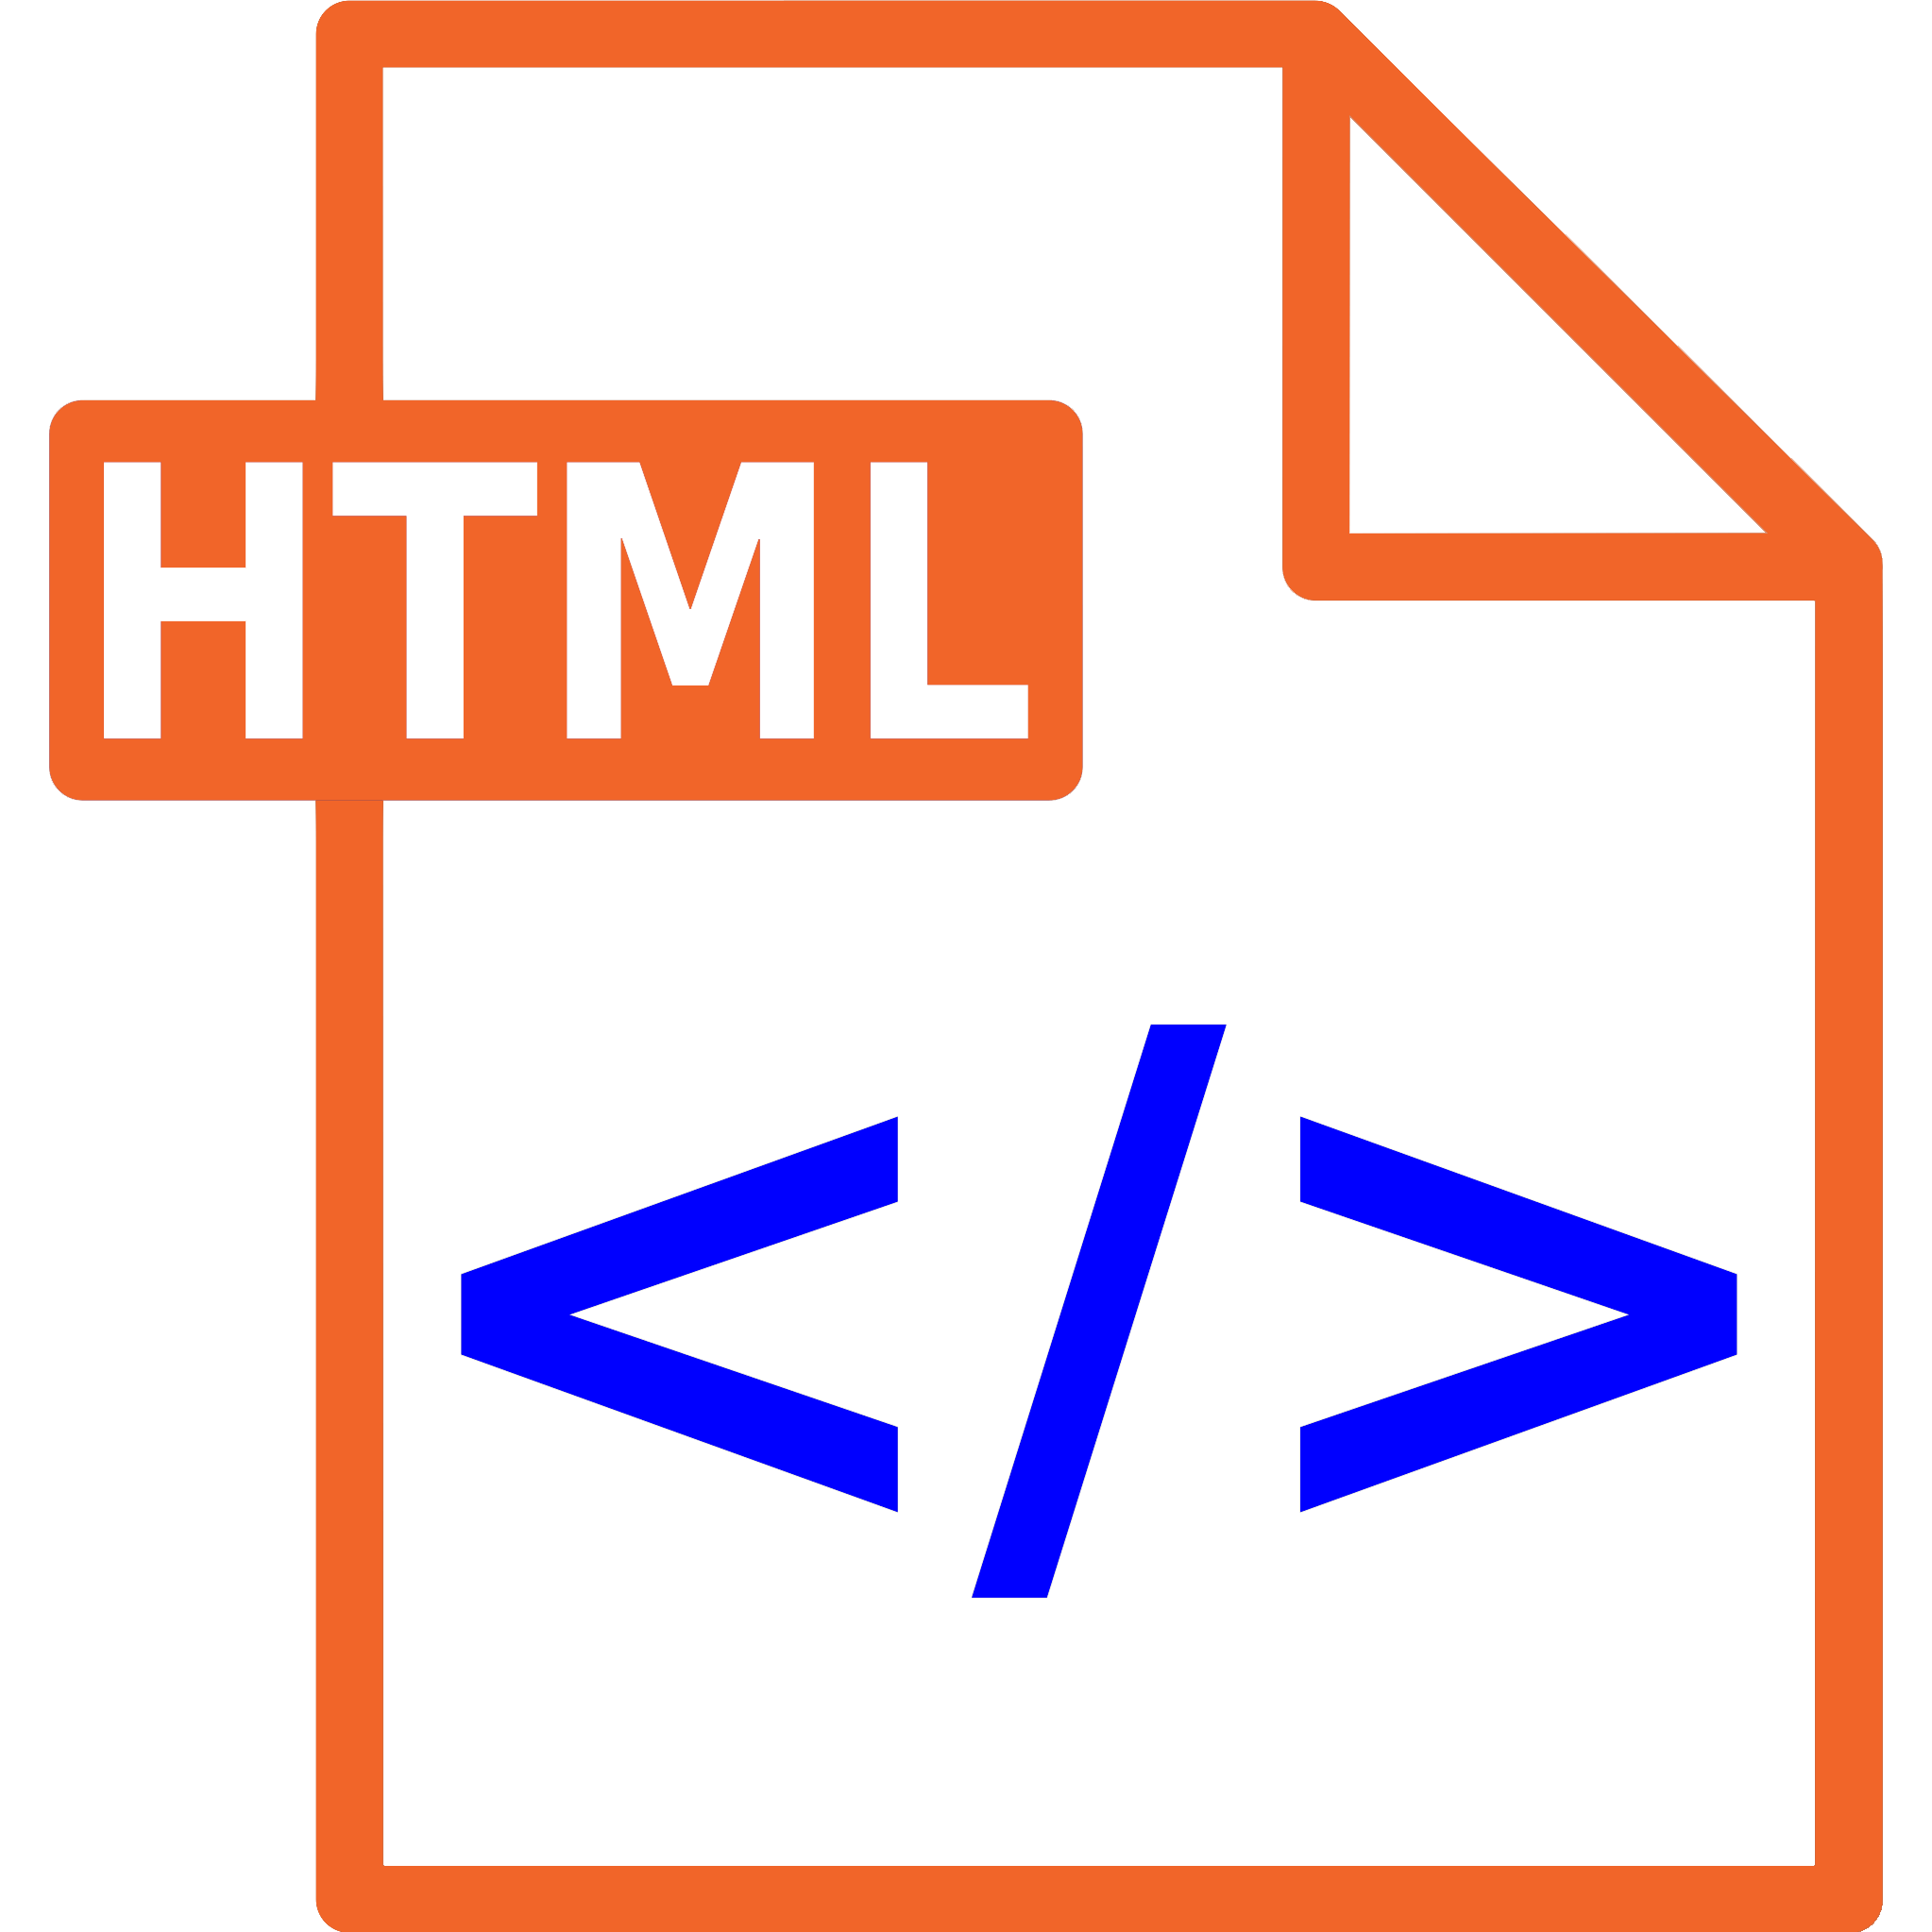 Https torgi ru html. Теги html. Изображение в html. Html рисунок. Базовые Теги html.